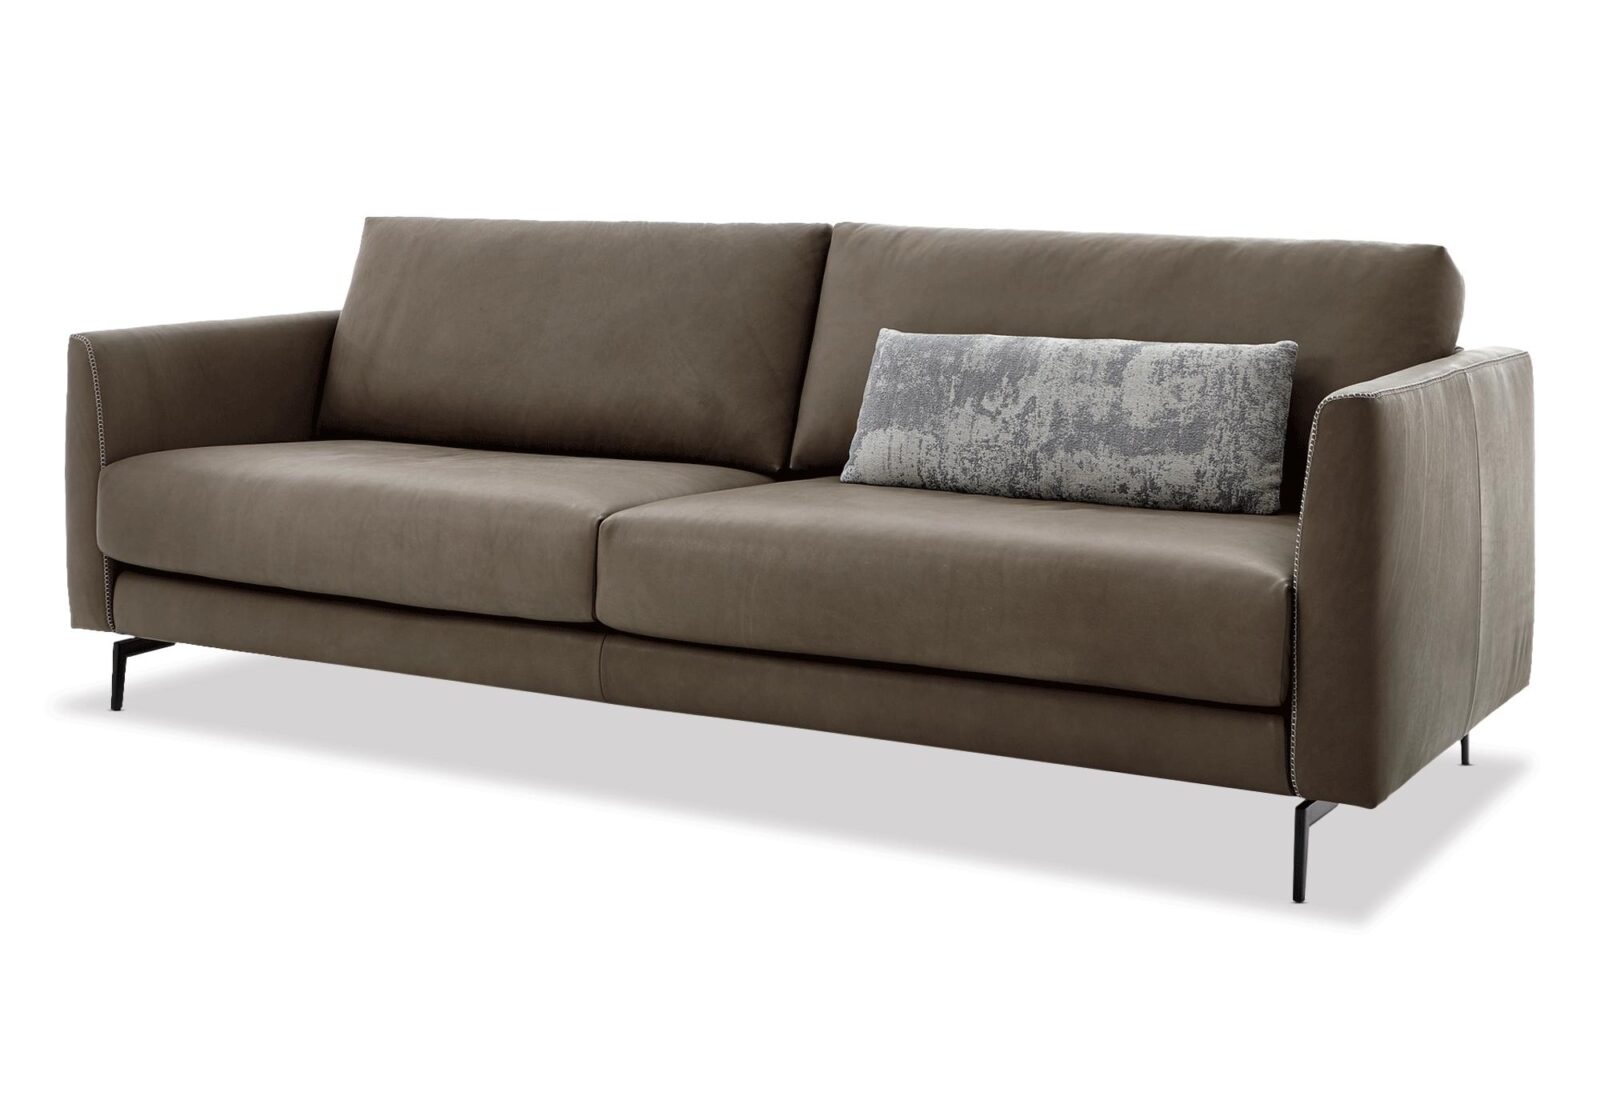 2.5er Sofa Omega  in Leder oder Stoff. Bezug: Leder. Farbe: Anthrazit. Erhältlich bei Möbel Gallati.